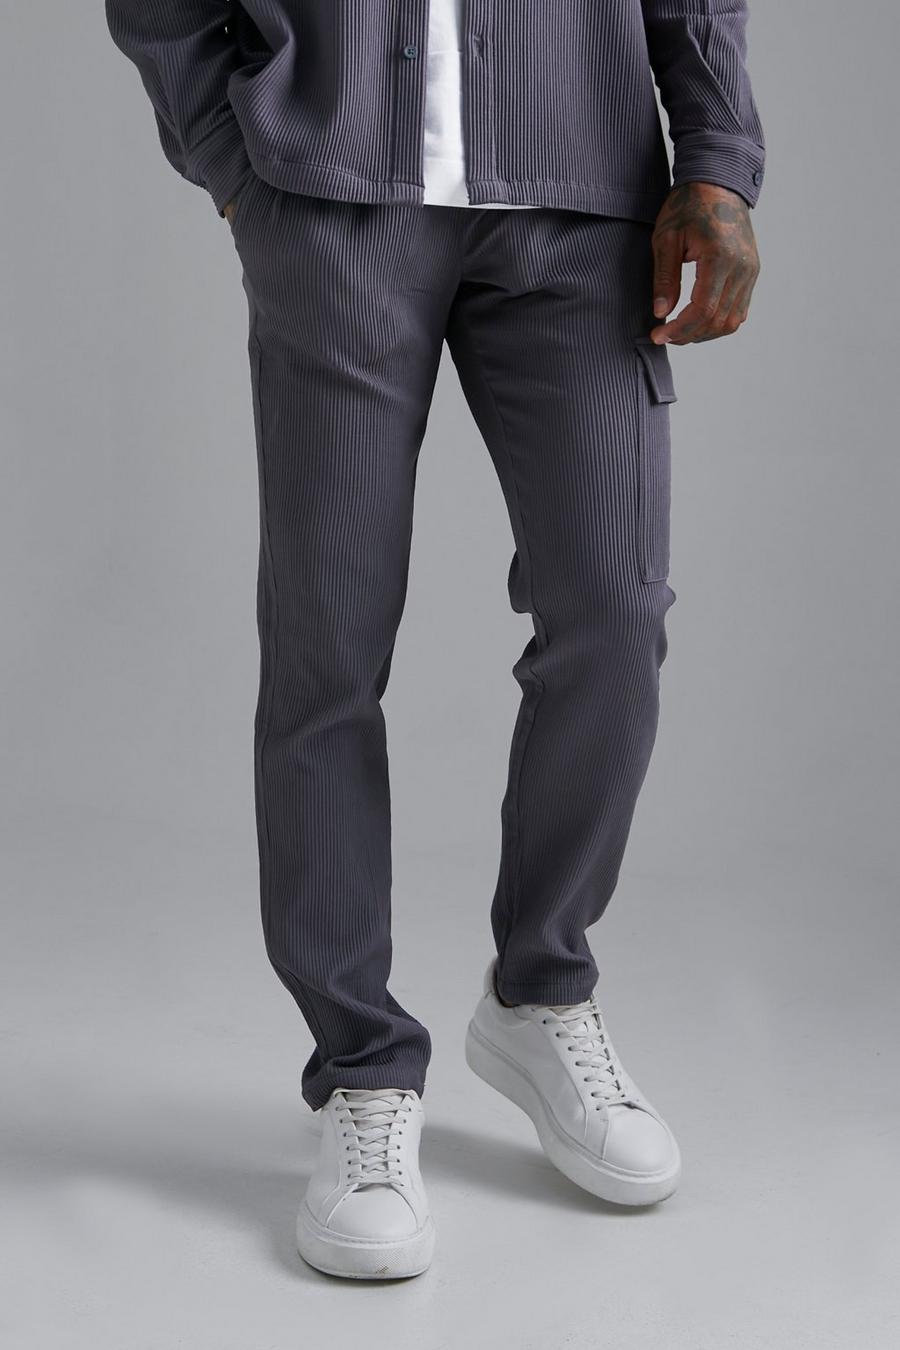 Pantalón pesquero plisado ajustado, Dark grey gris image number 1